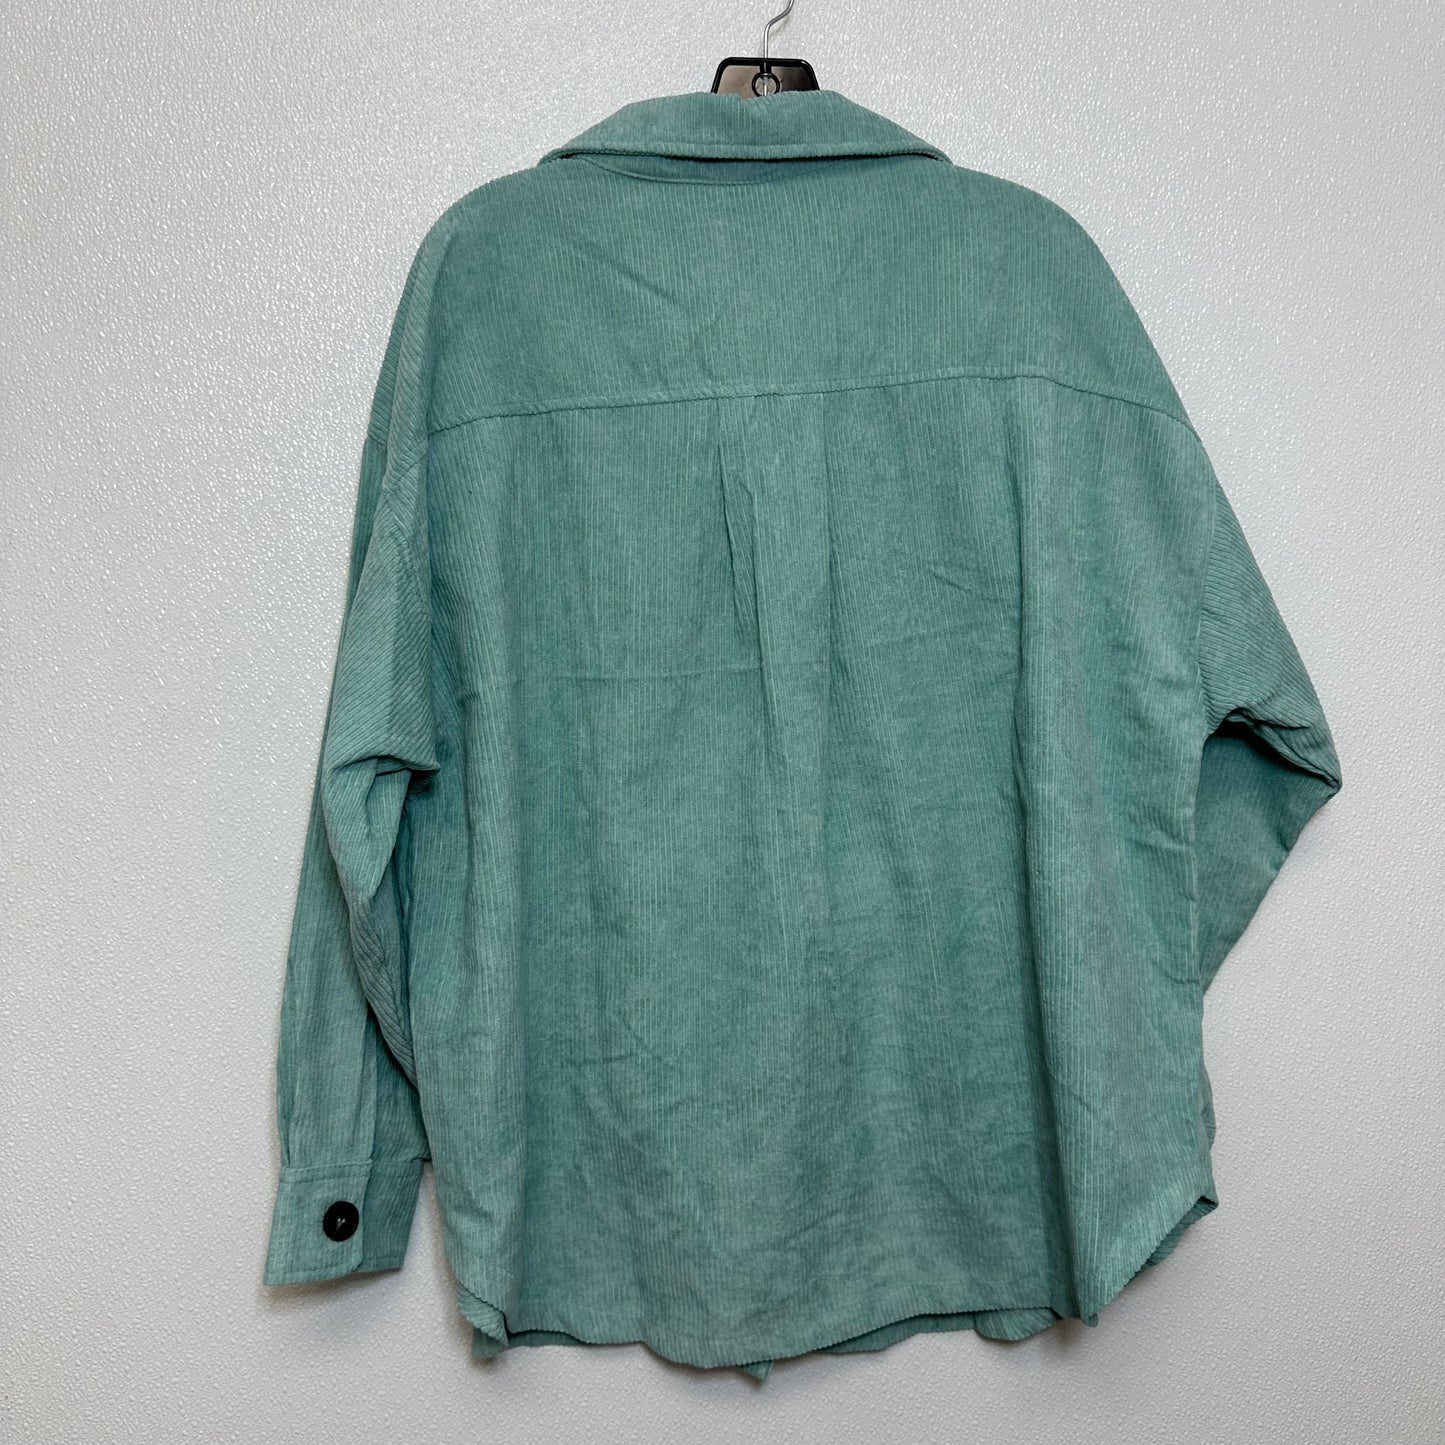 Jacket Shirt By Zenana Outfitters  Size: L